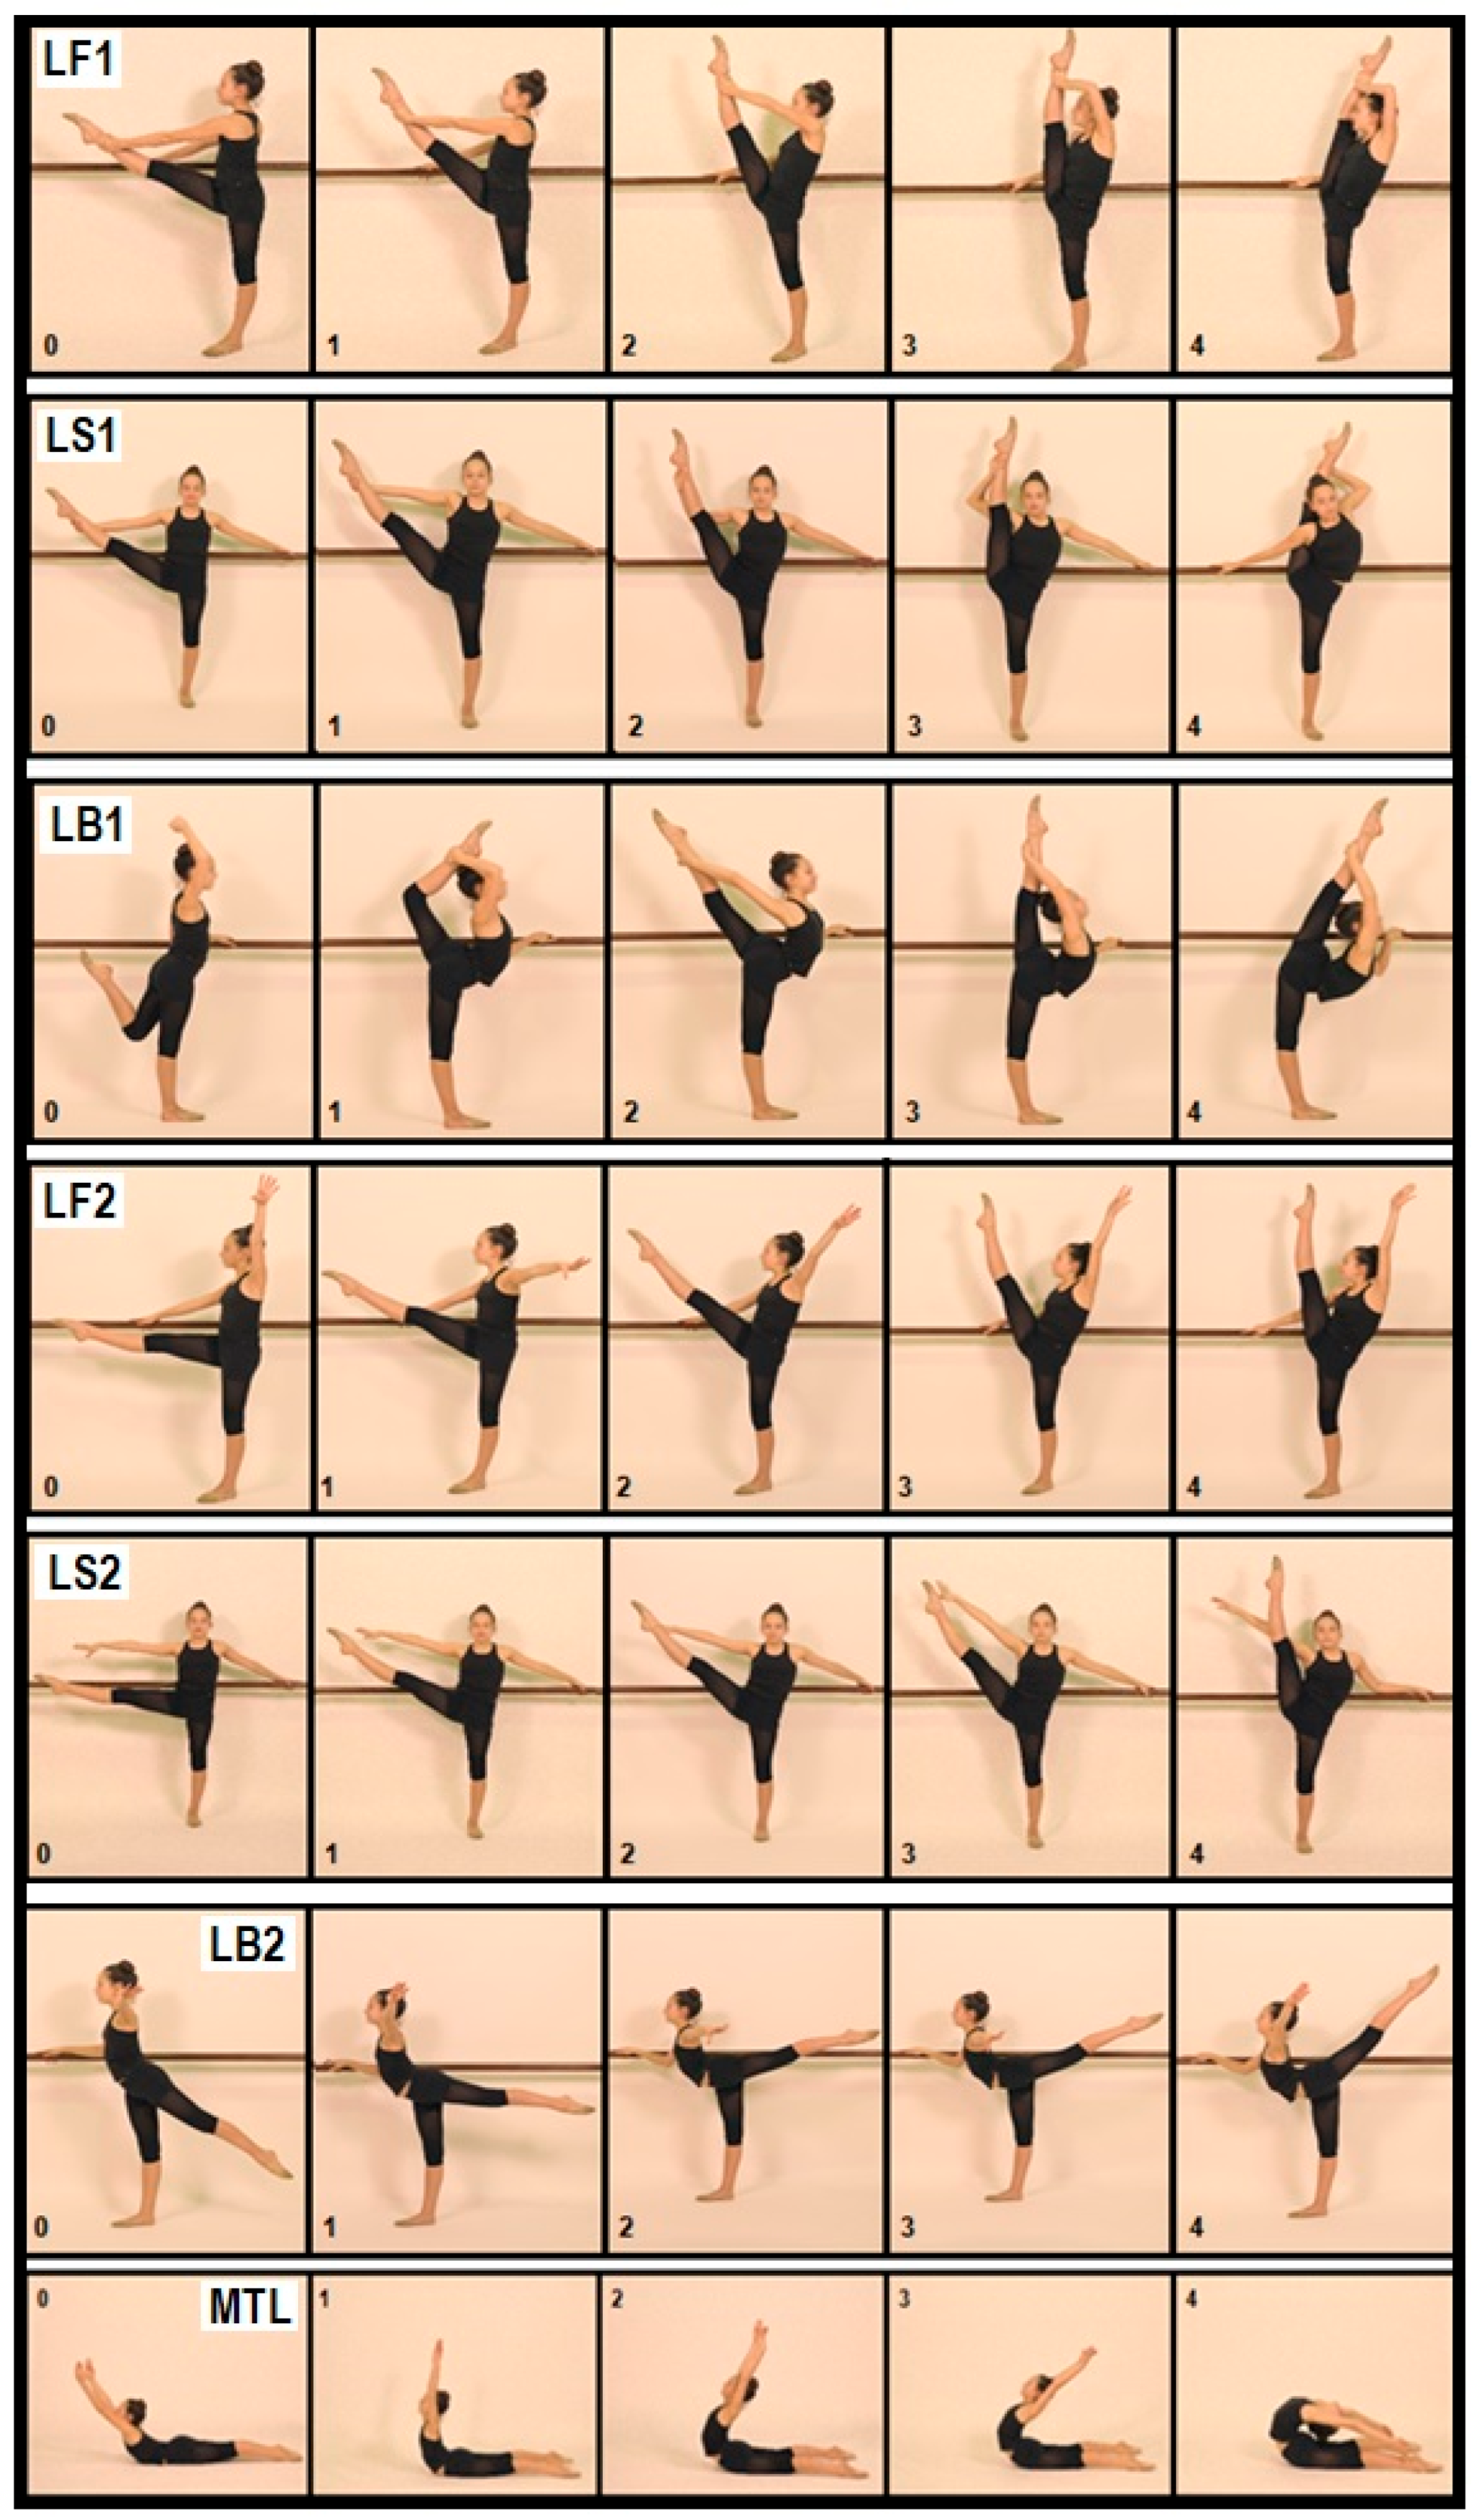 Leg Stretching Strap and Ballet Balance Board, 2 Pc. Set